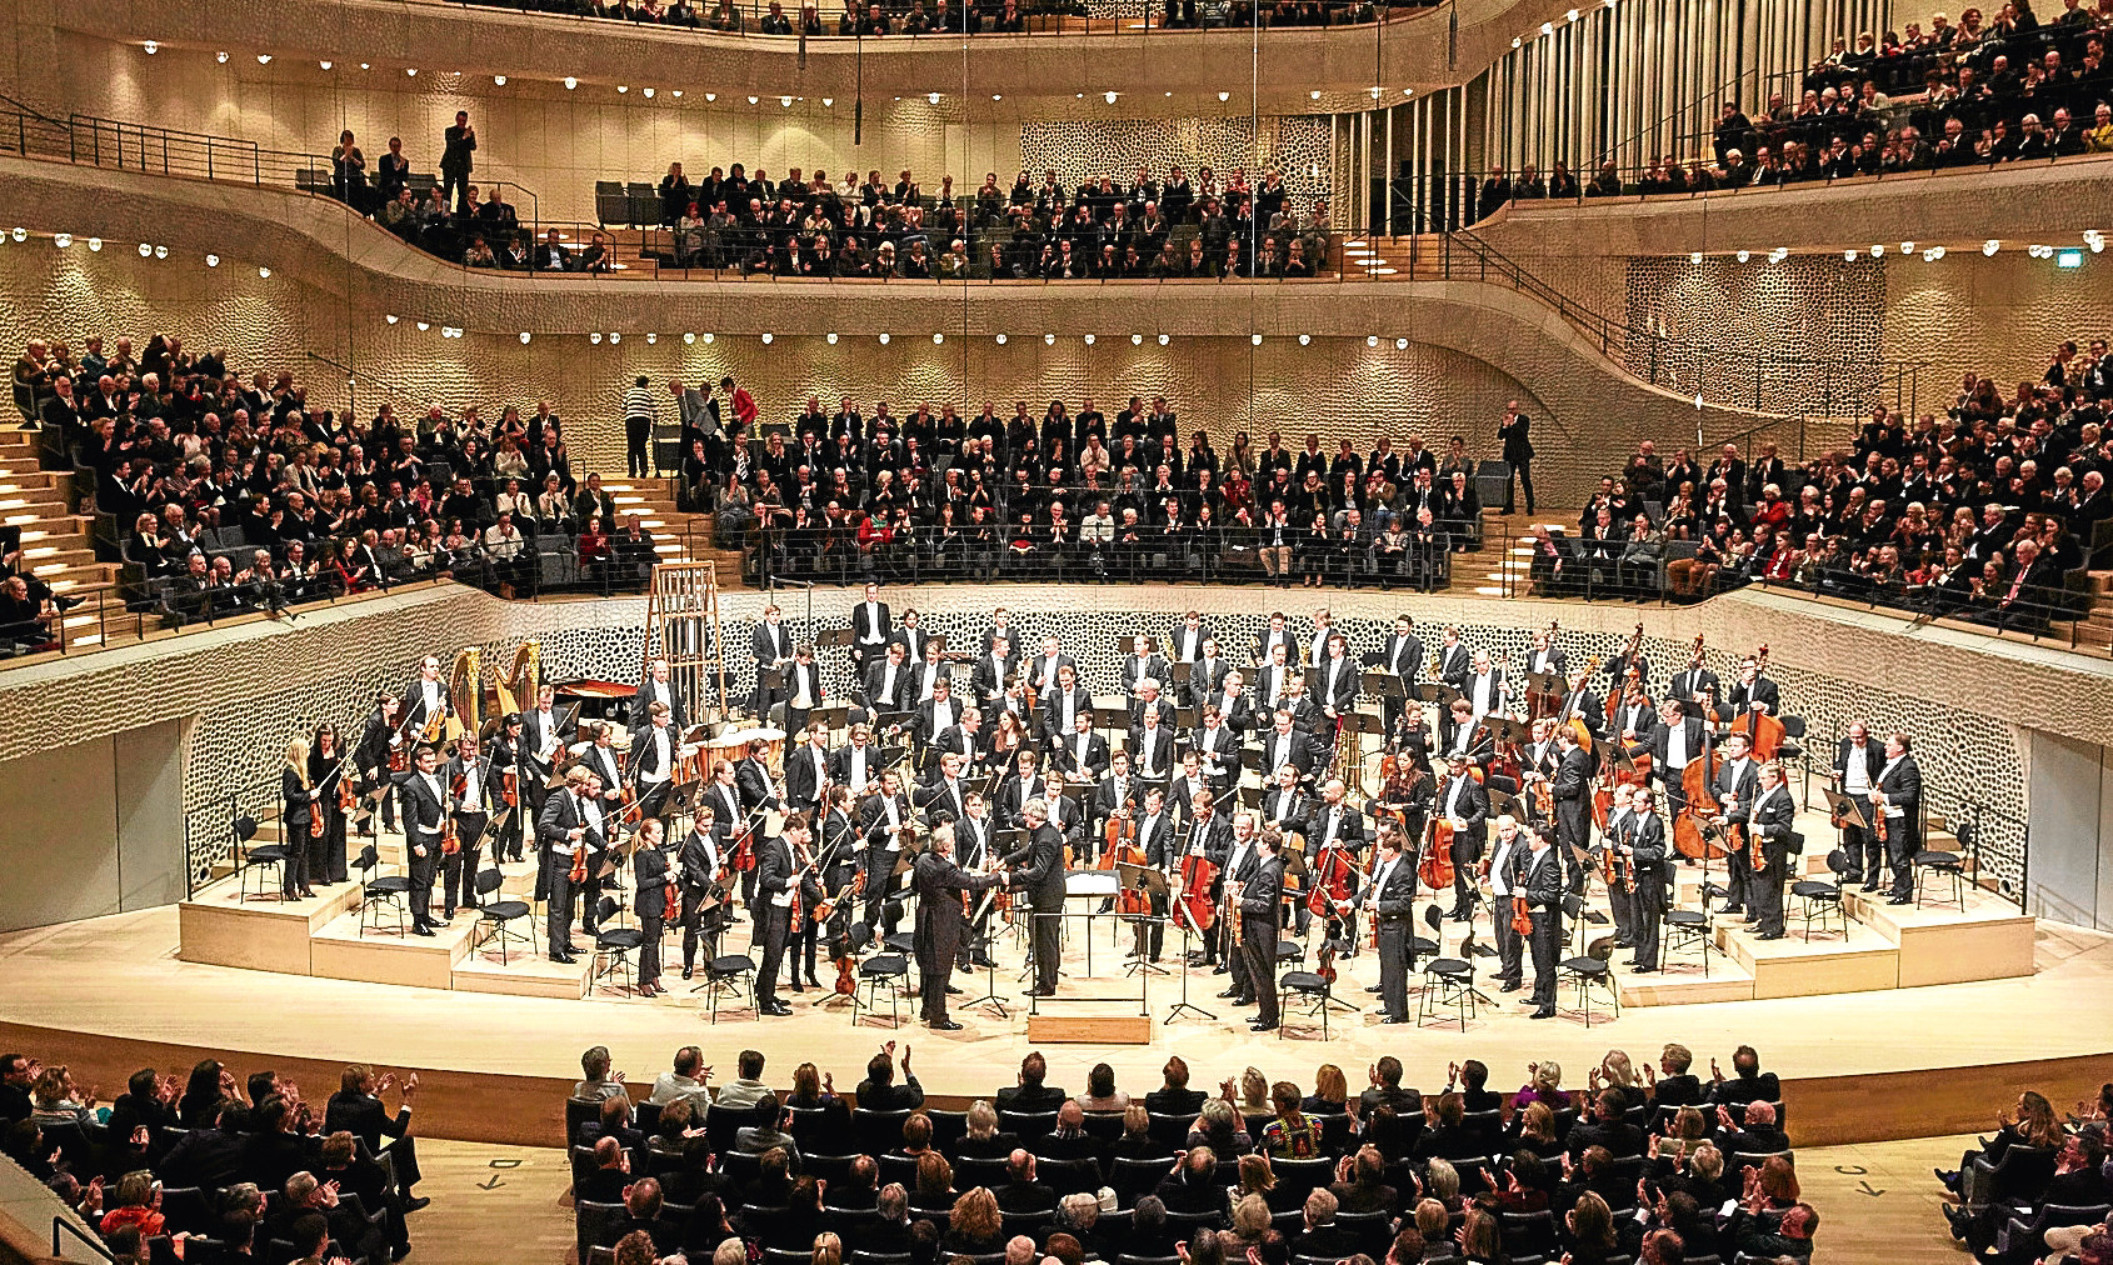 Exterity worked on the Elbphilharmonie in Hamburg.